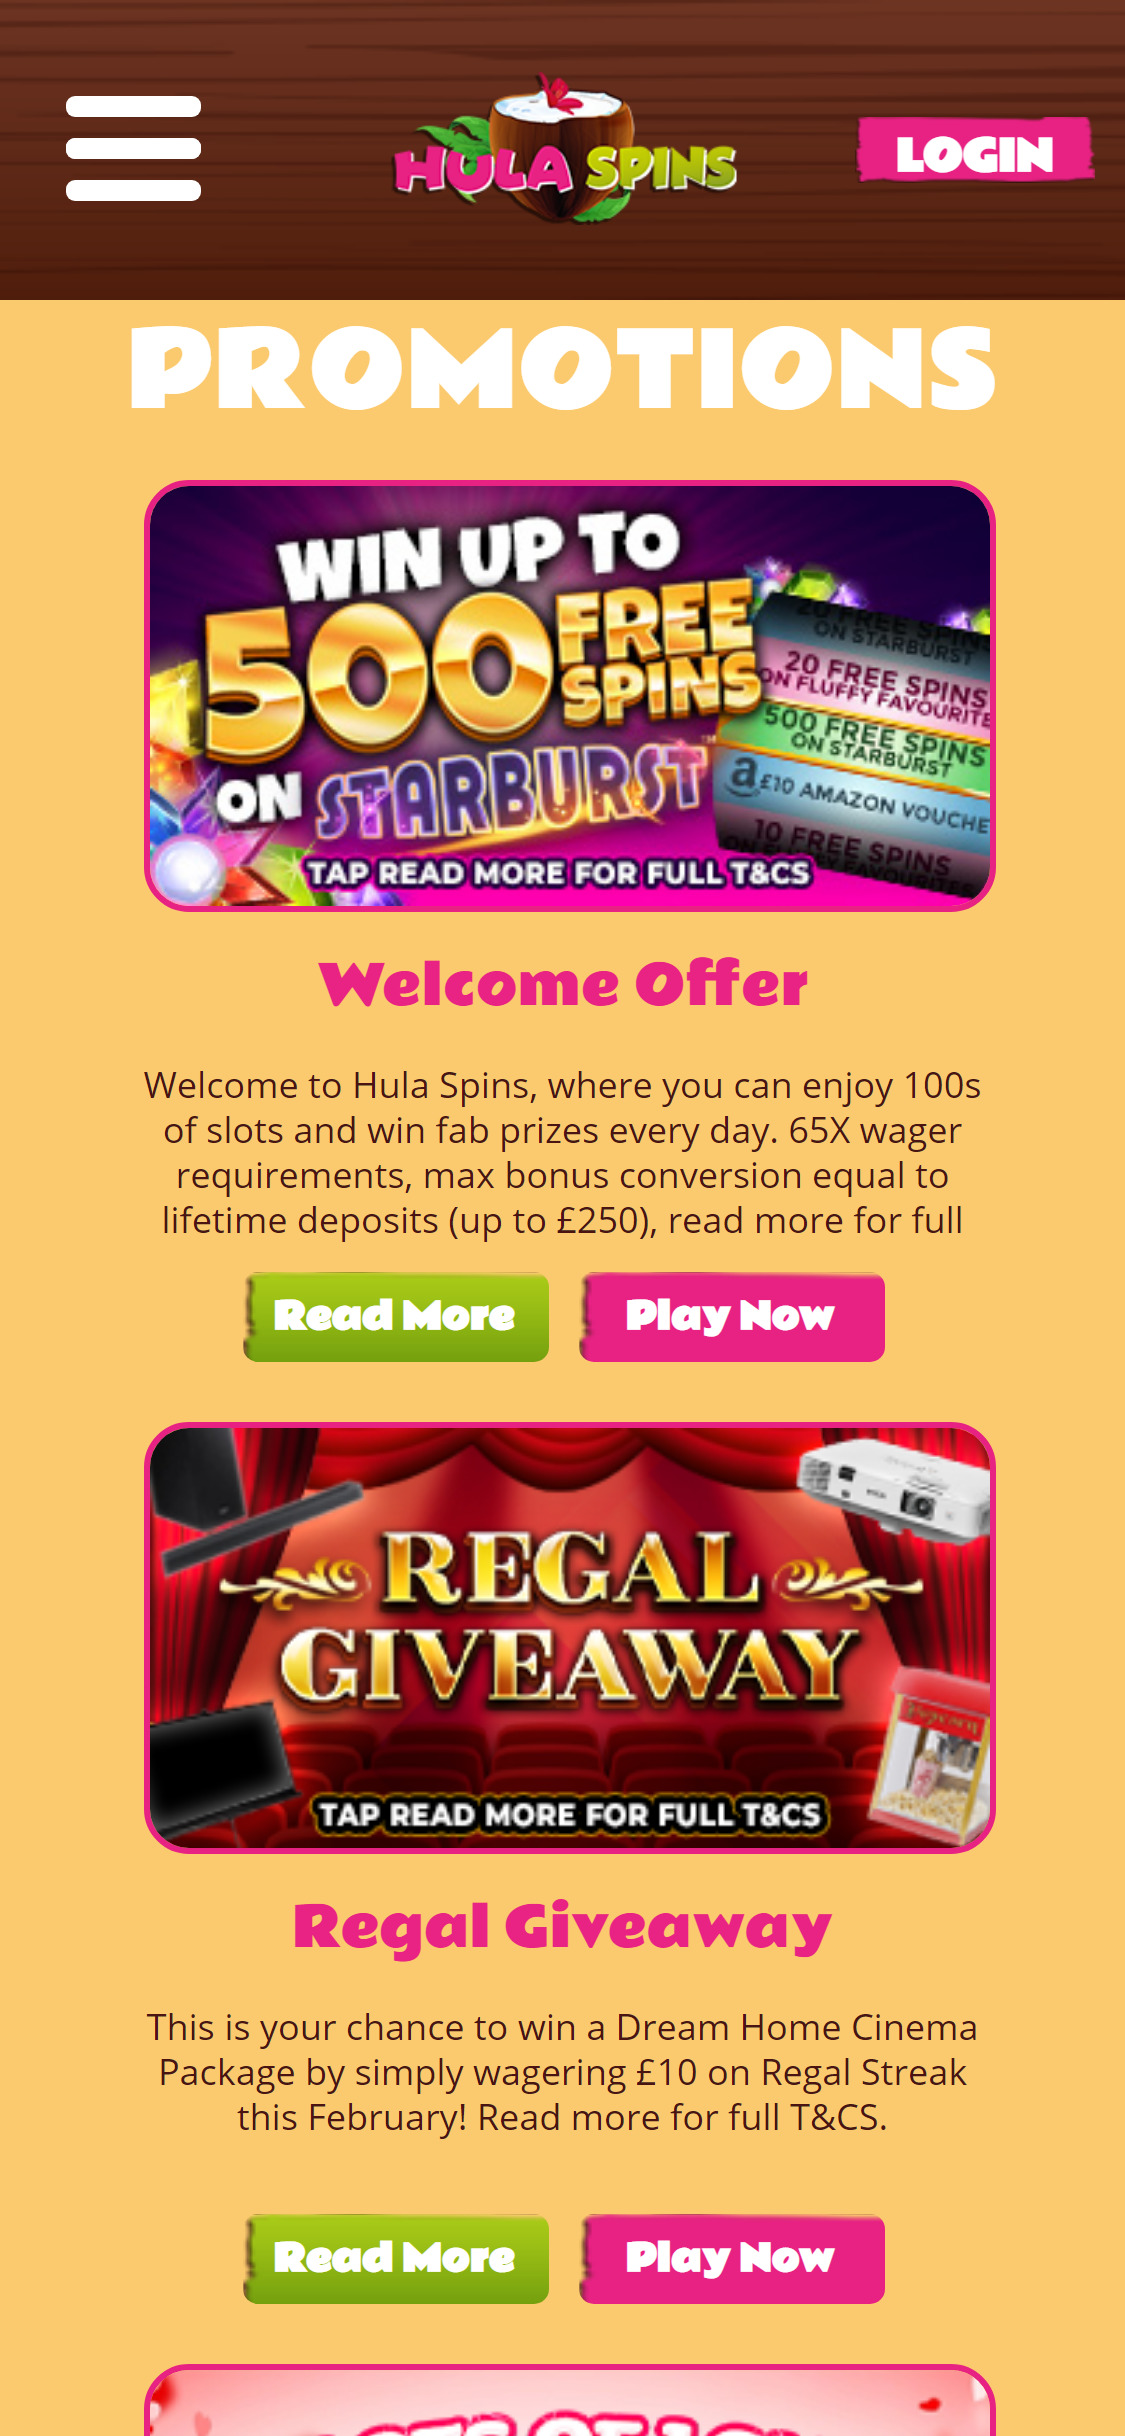 Hula Spins Casino Mobile No Deposit Bonus Review